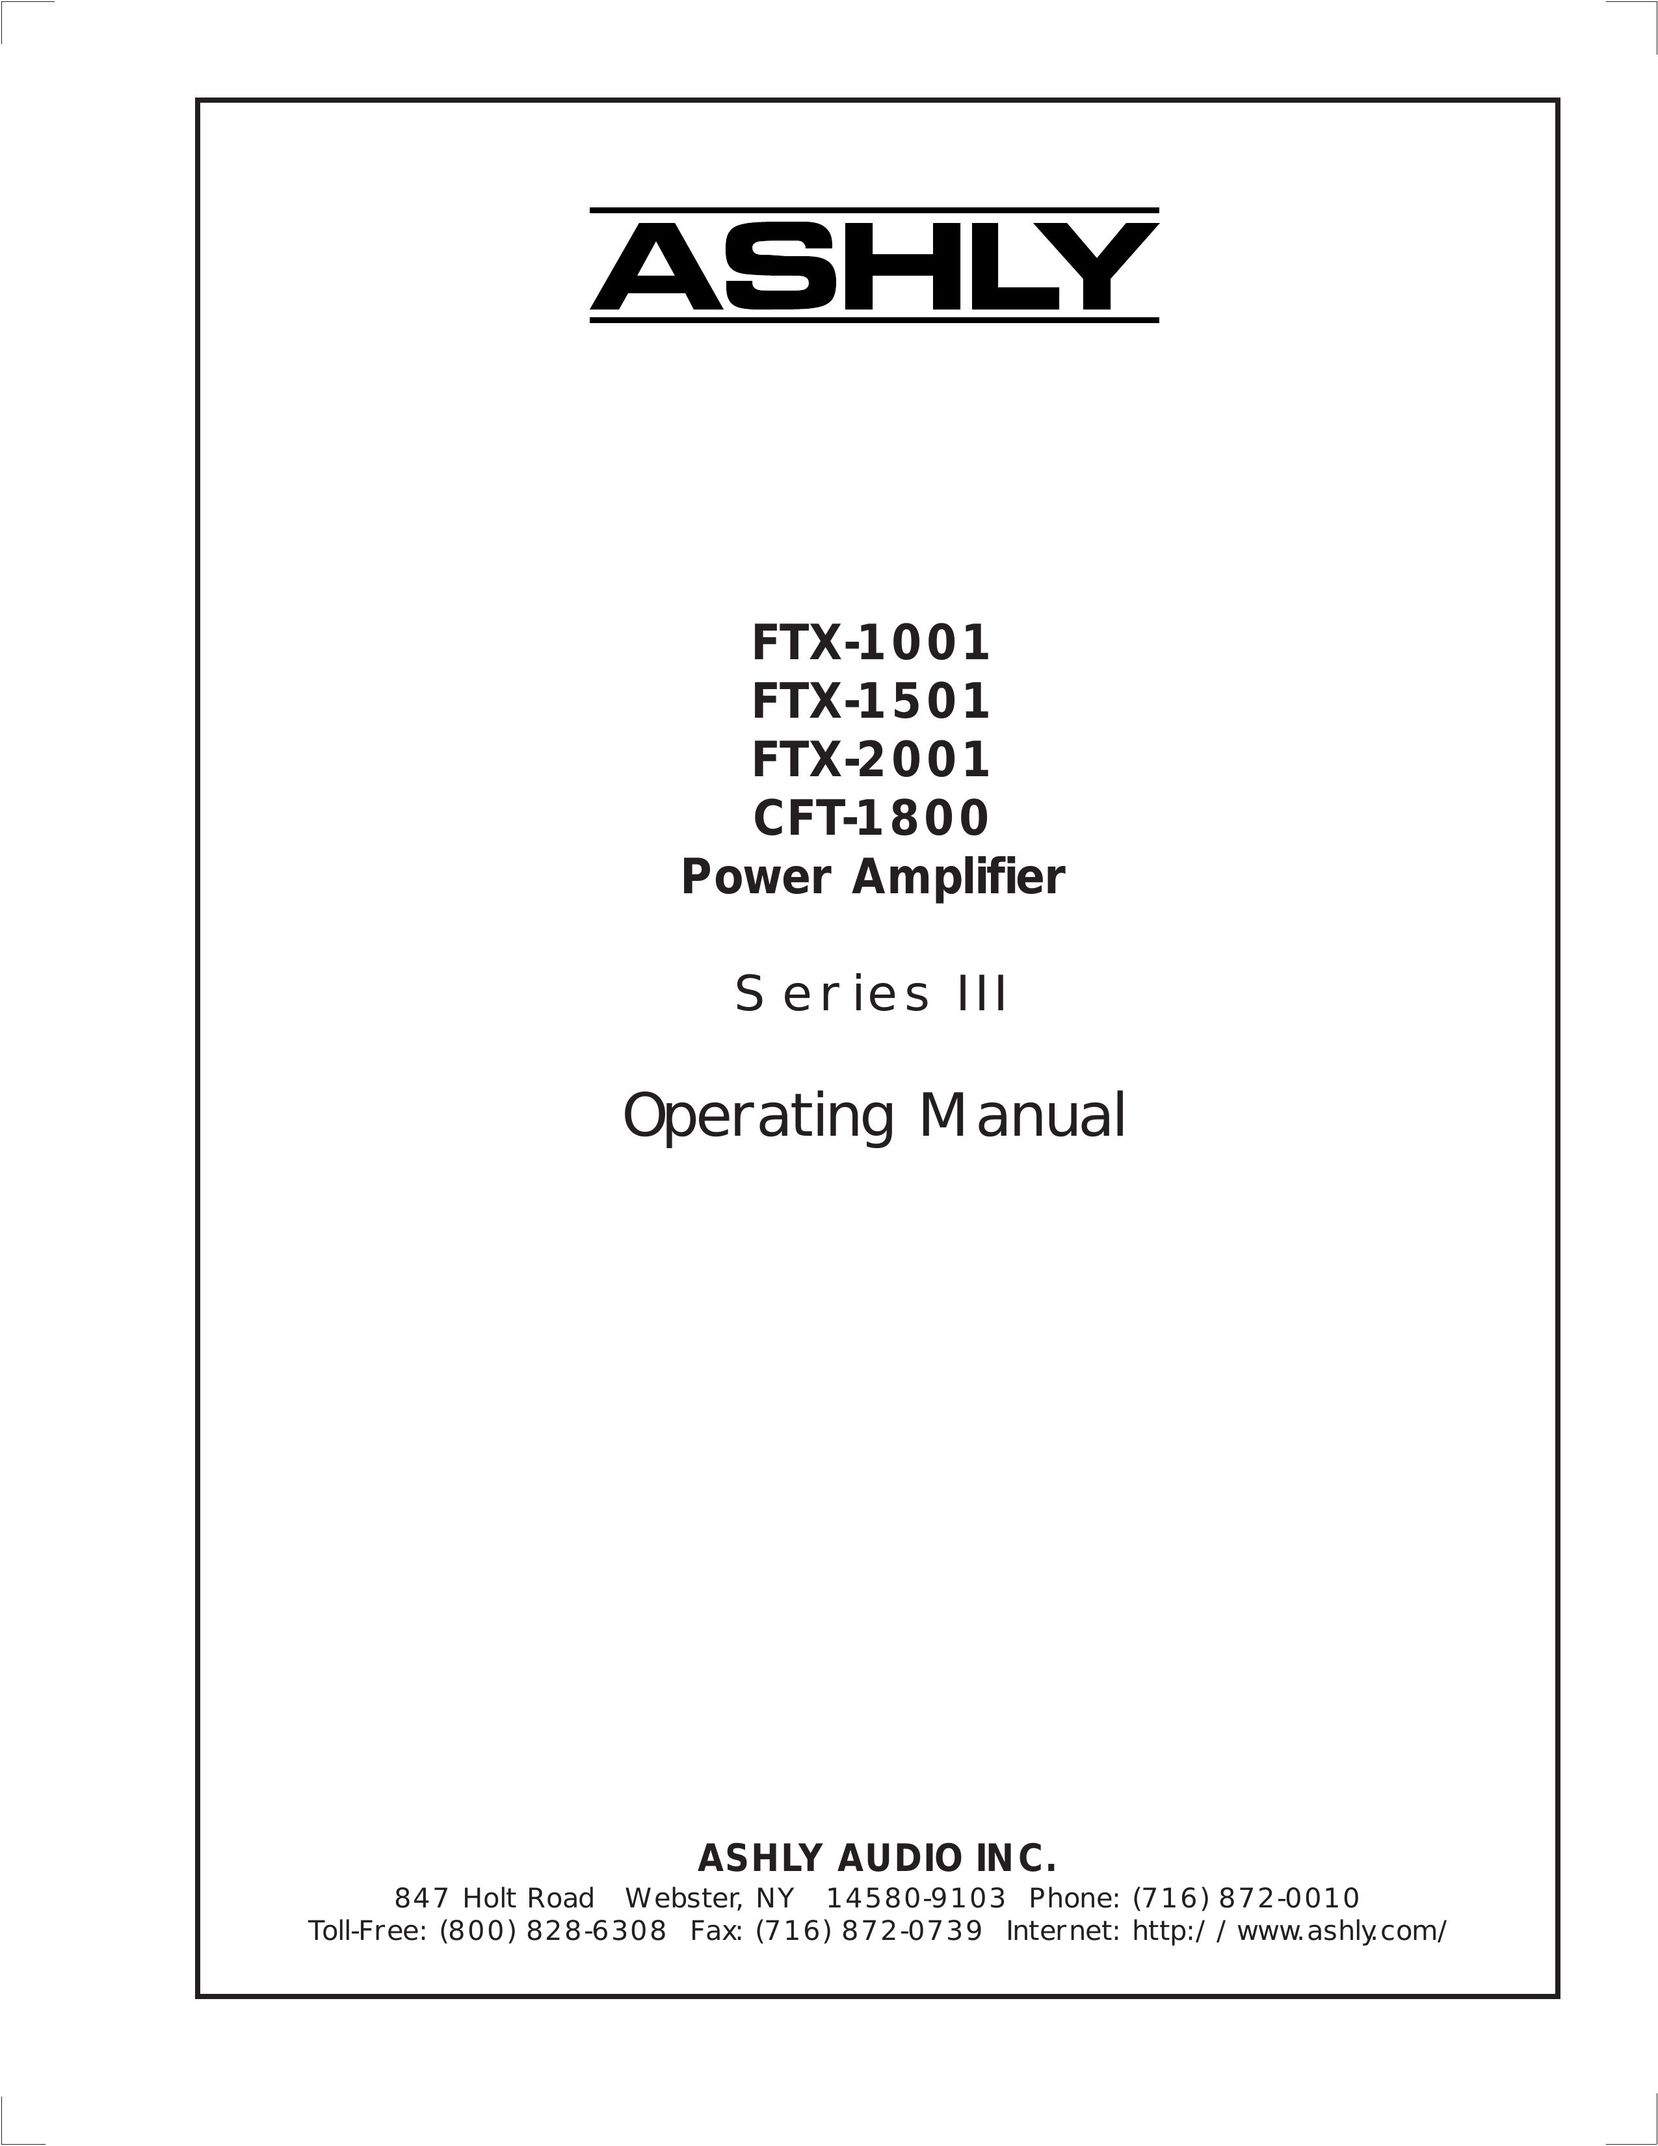 Ashly FTX-2001 Stereo Amplifier User Manual